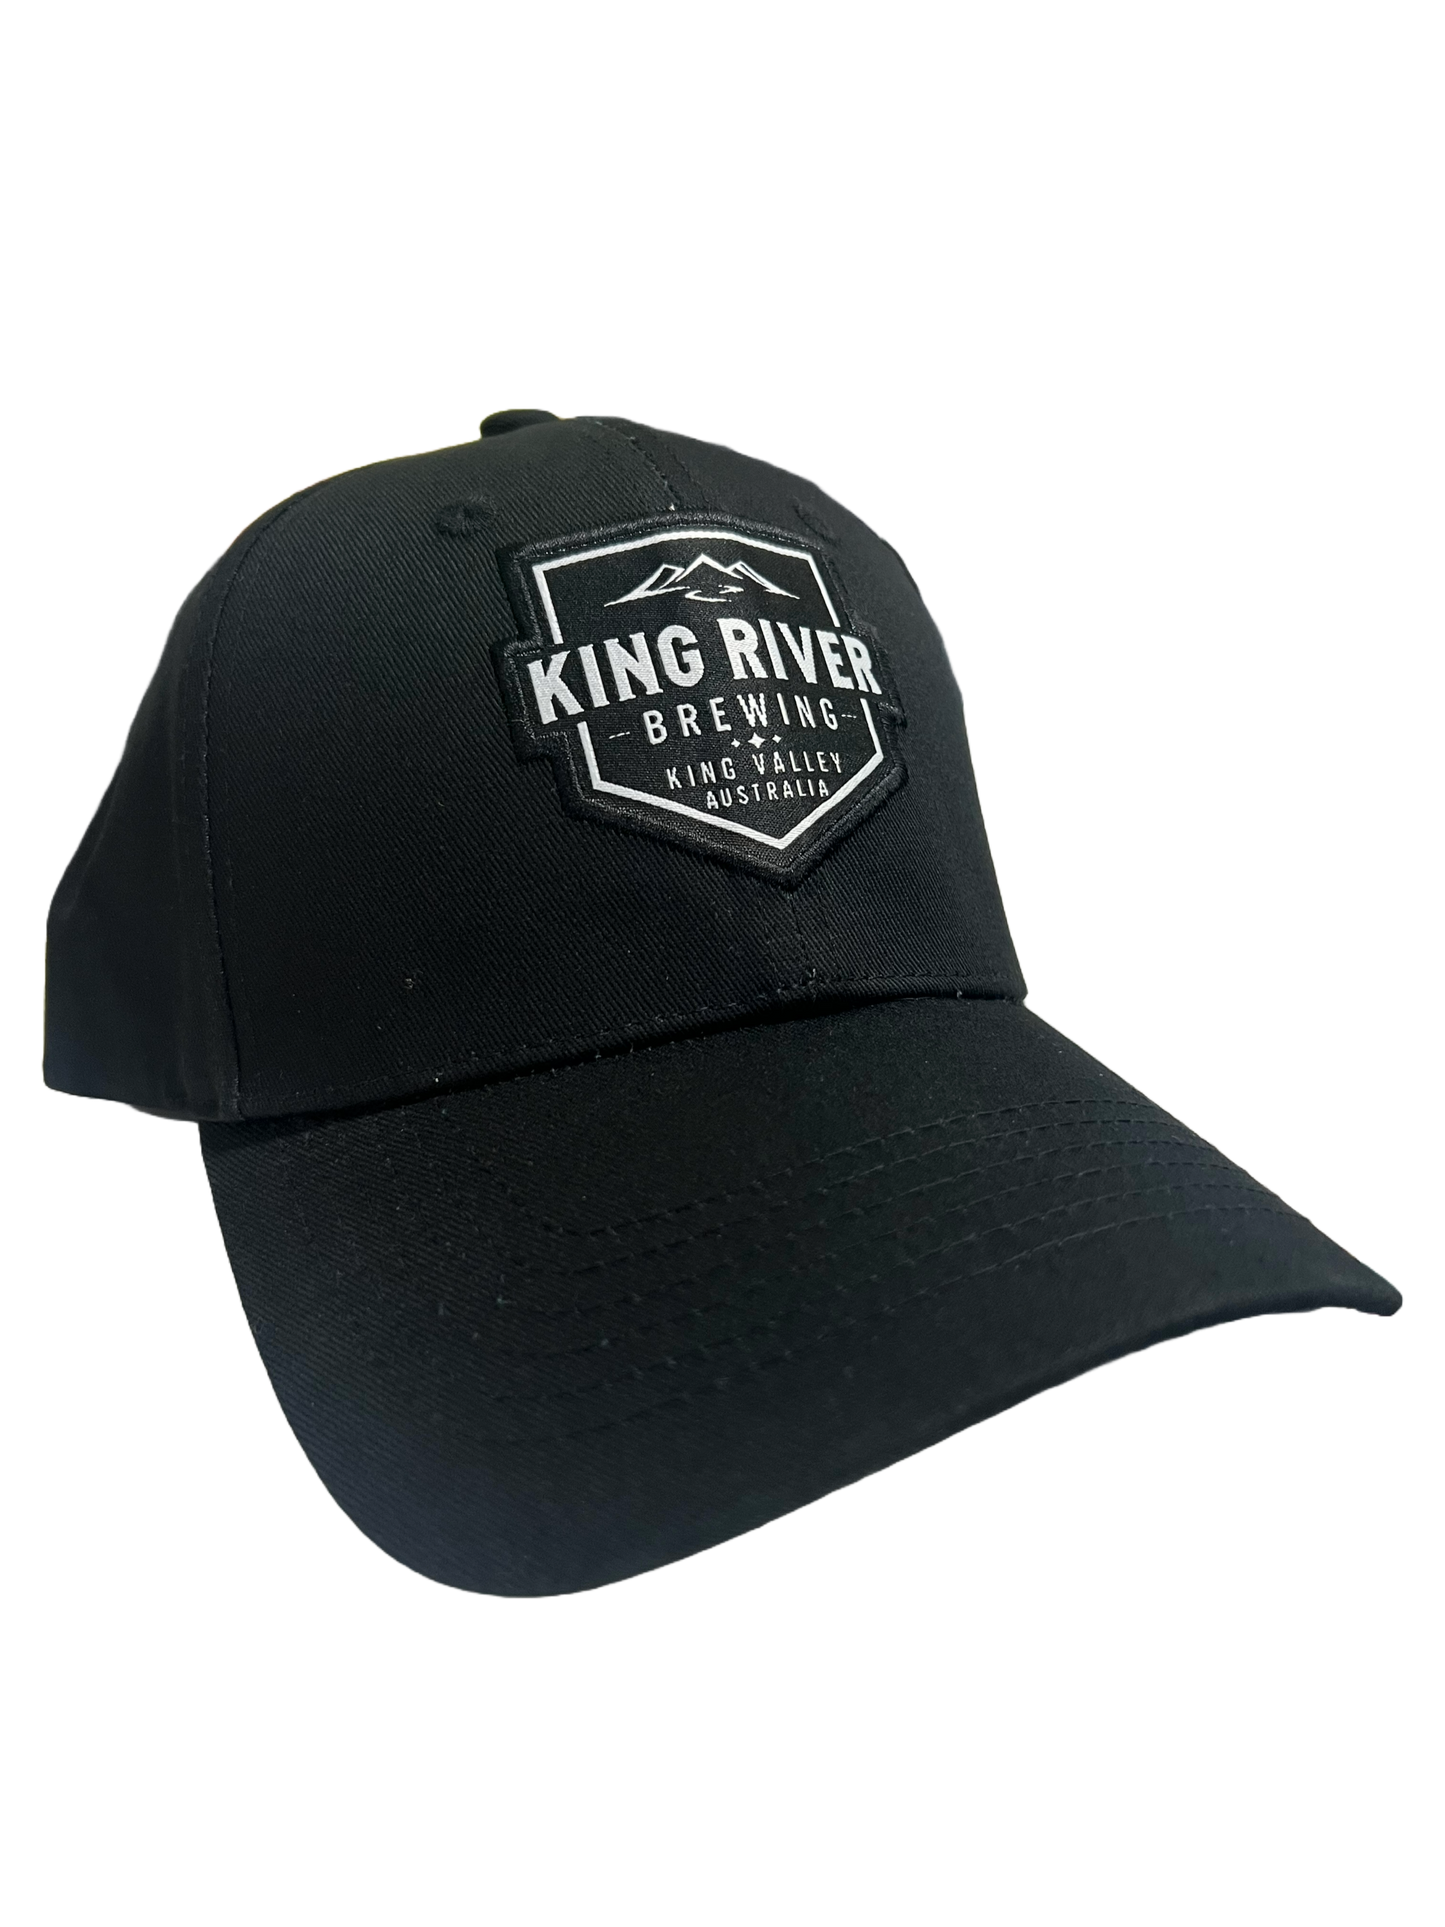 King River Brewing Cap